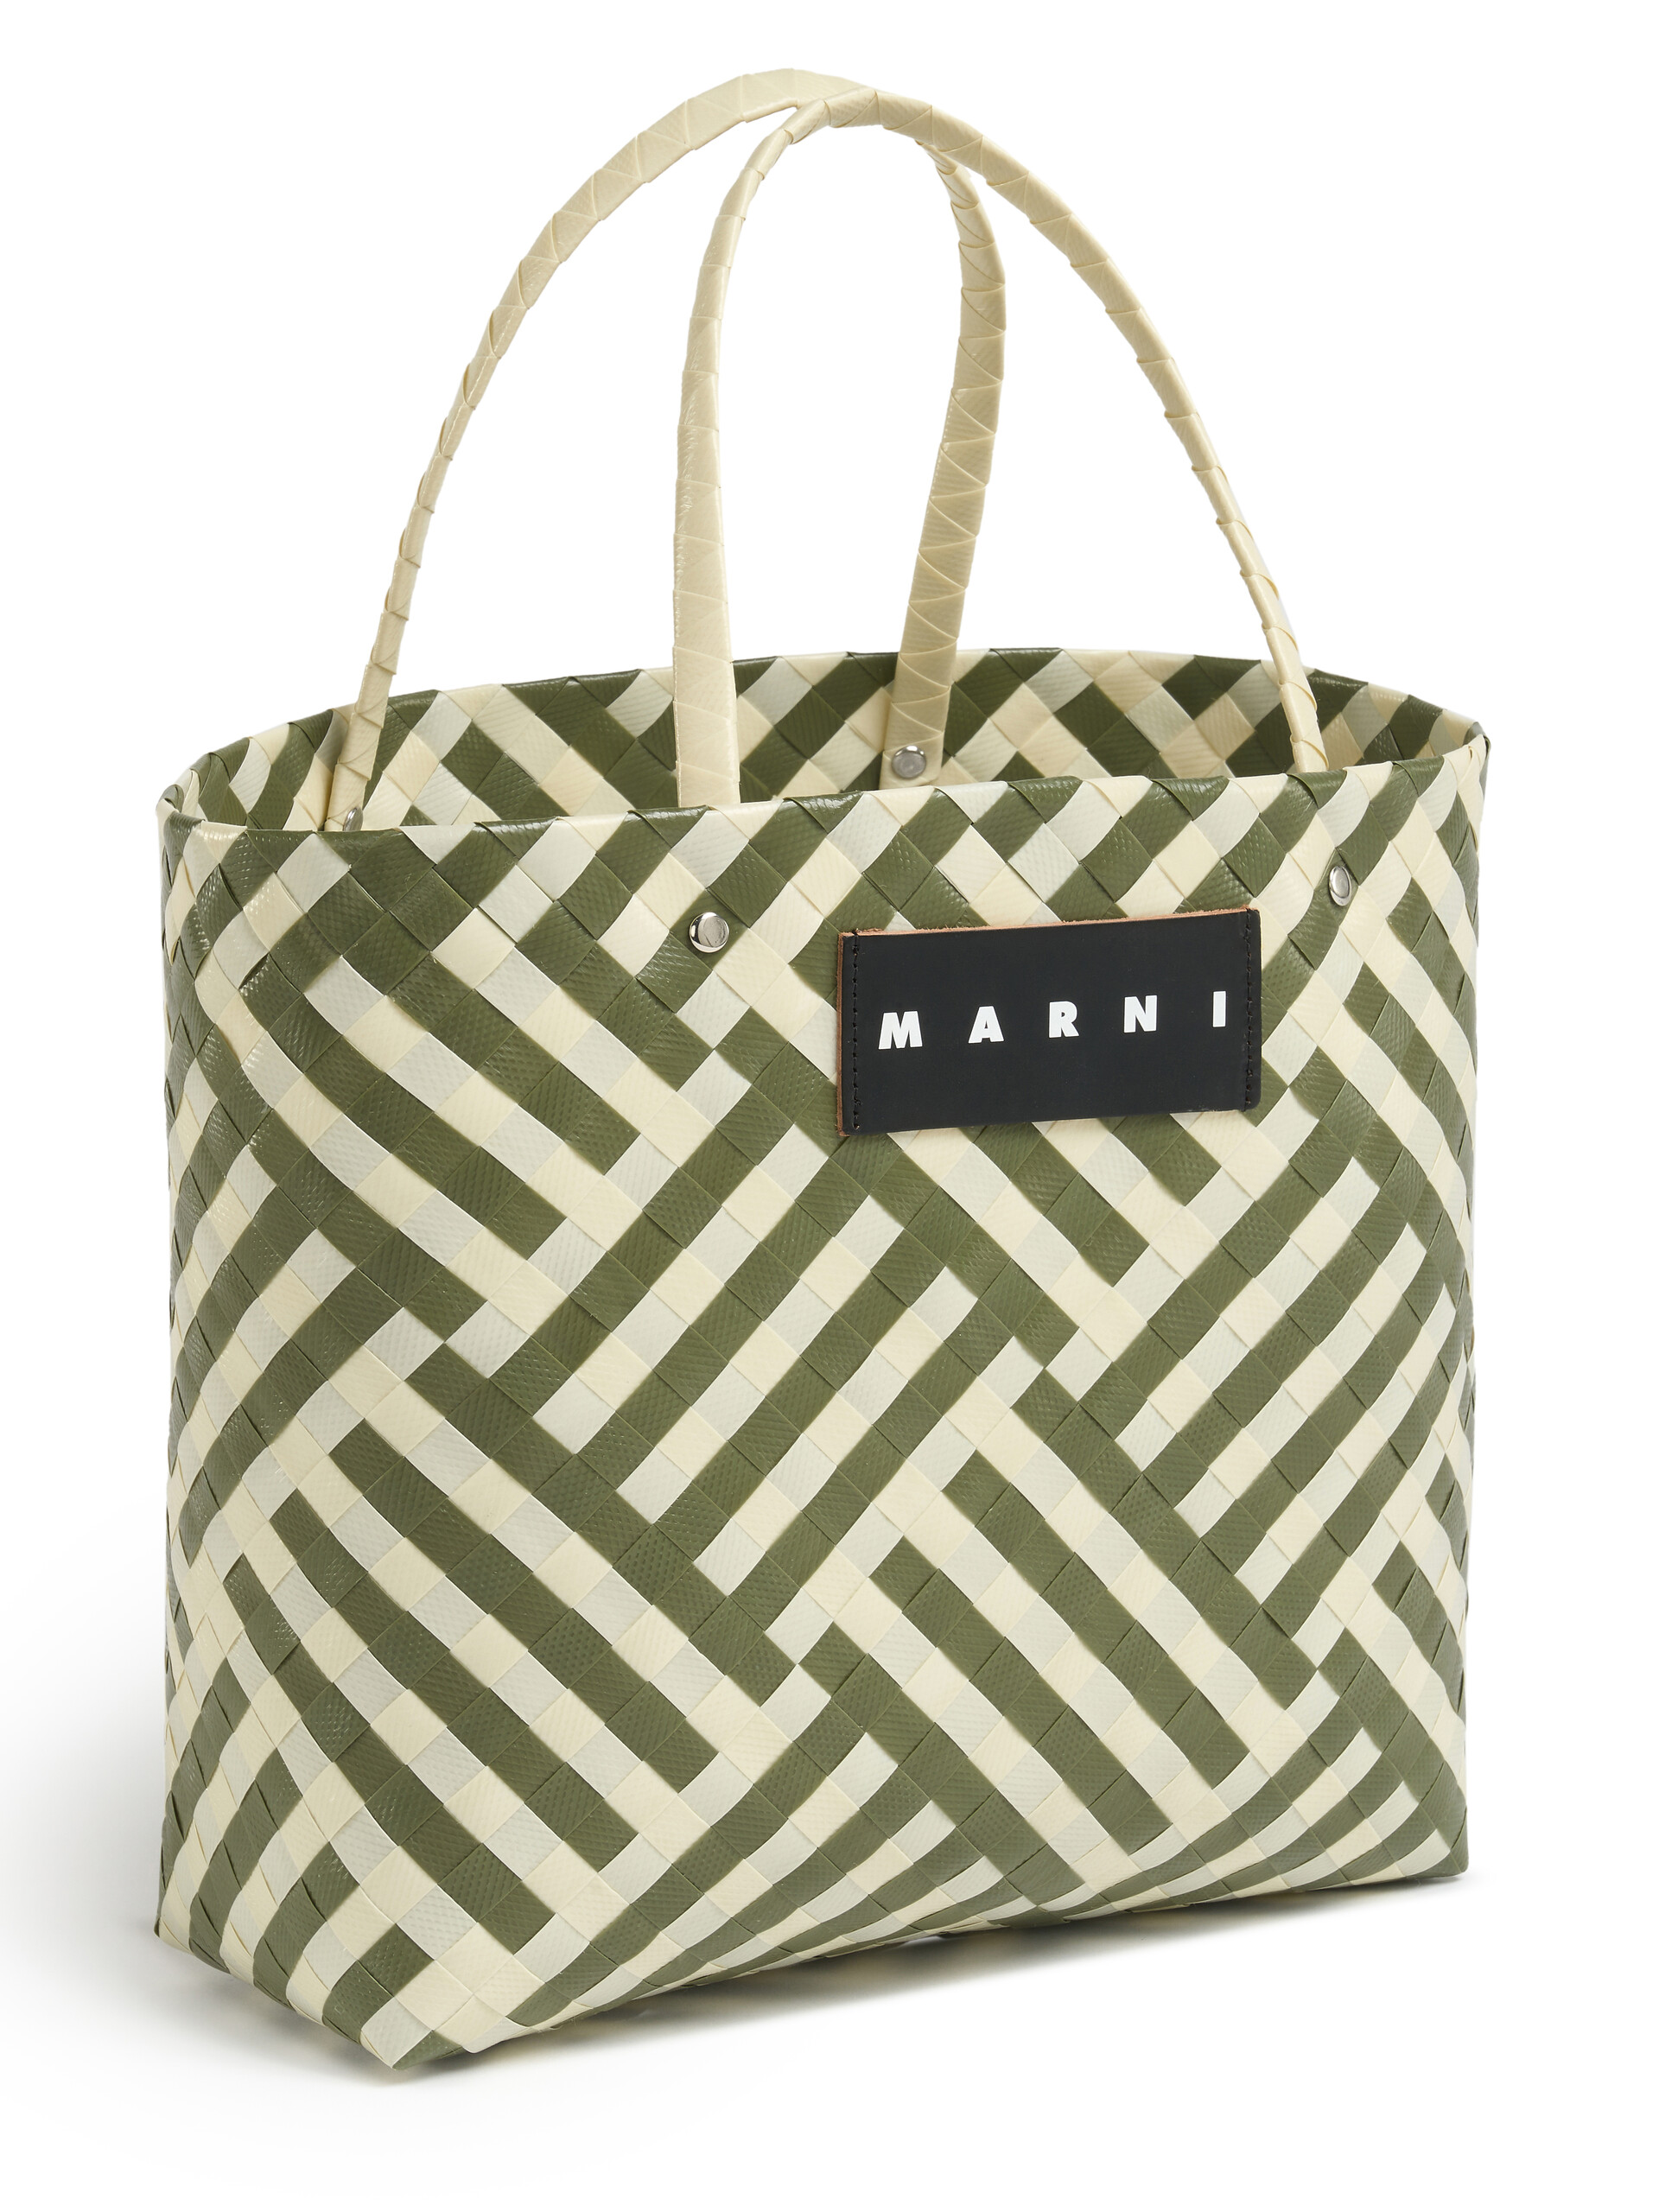 Green and white MARNI MARKET CHECK BASKET bag - Shopping Bags - Image 4